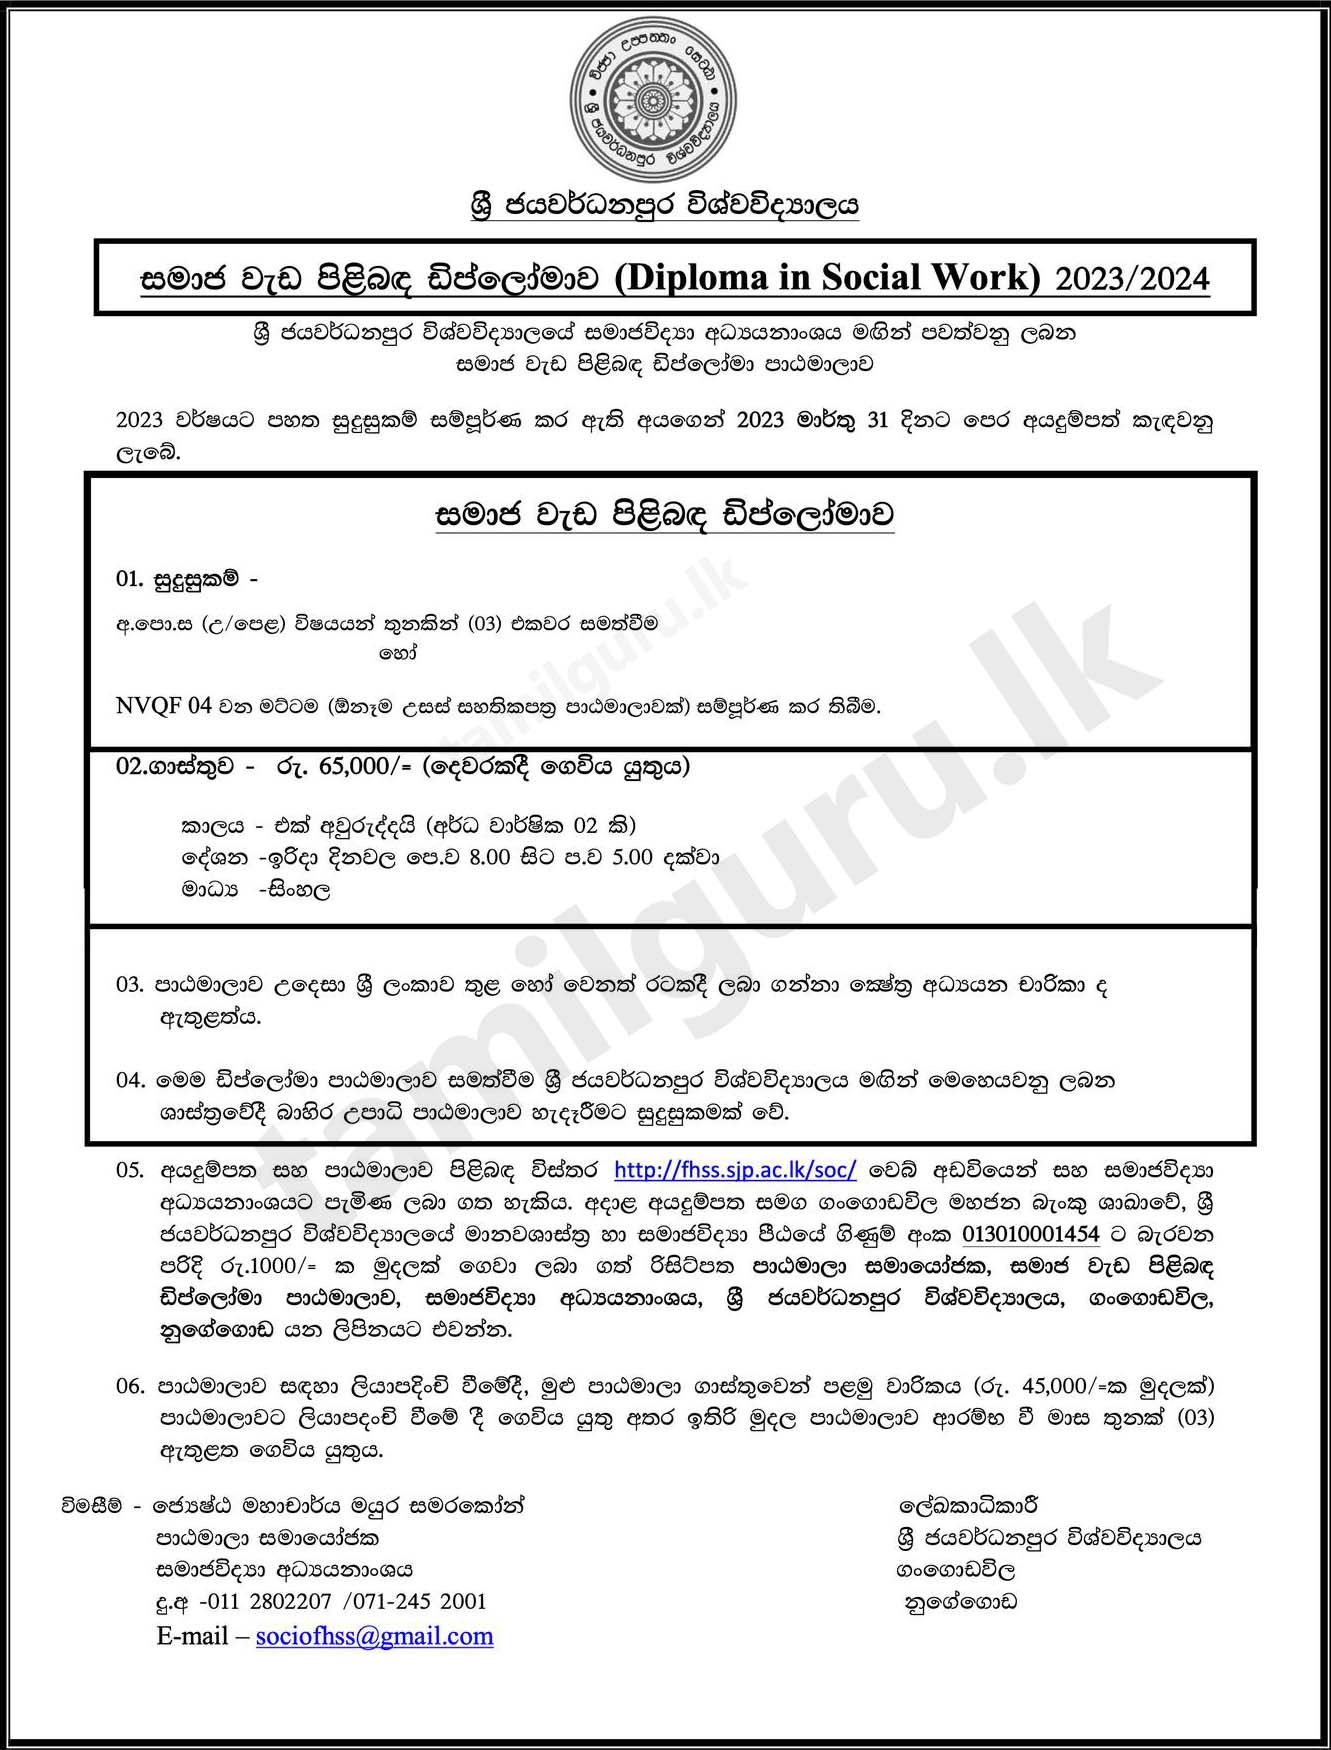 Calling Applications for Diploma in Social Work 2023/2024 - University of Sri Jayewardenepura